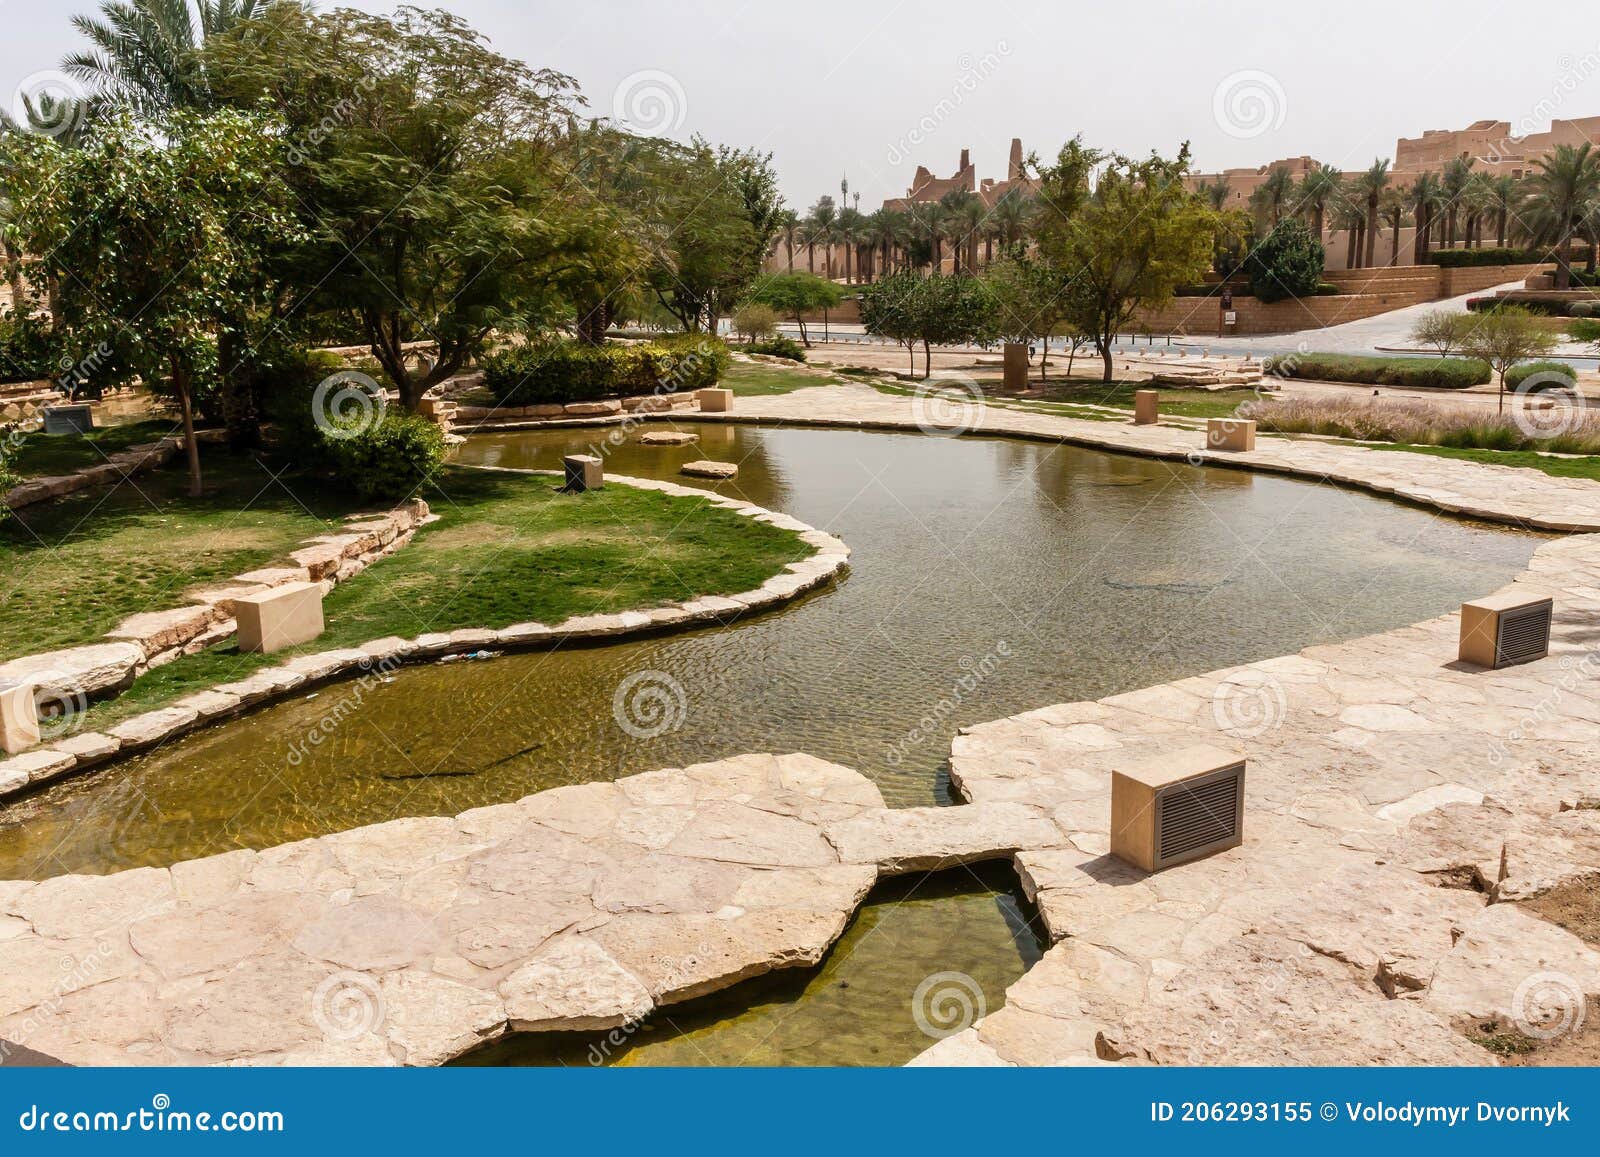 green terraces and artificial ponds of al bujairi park, riyadh, saudi arabia